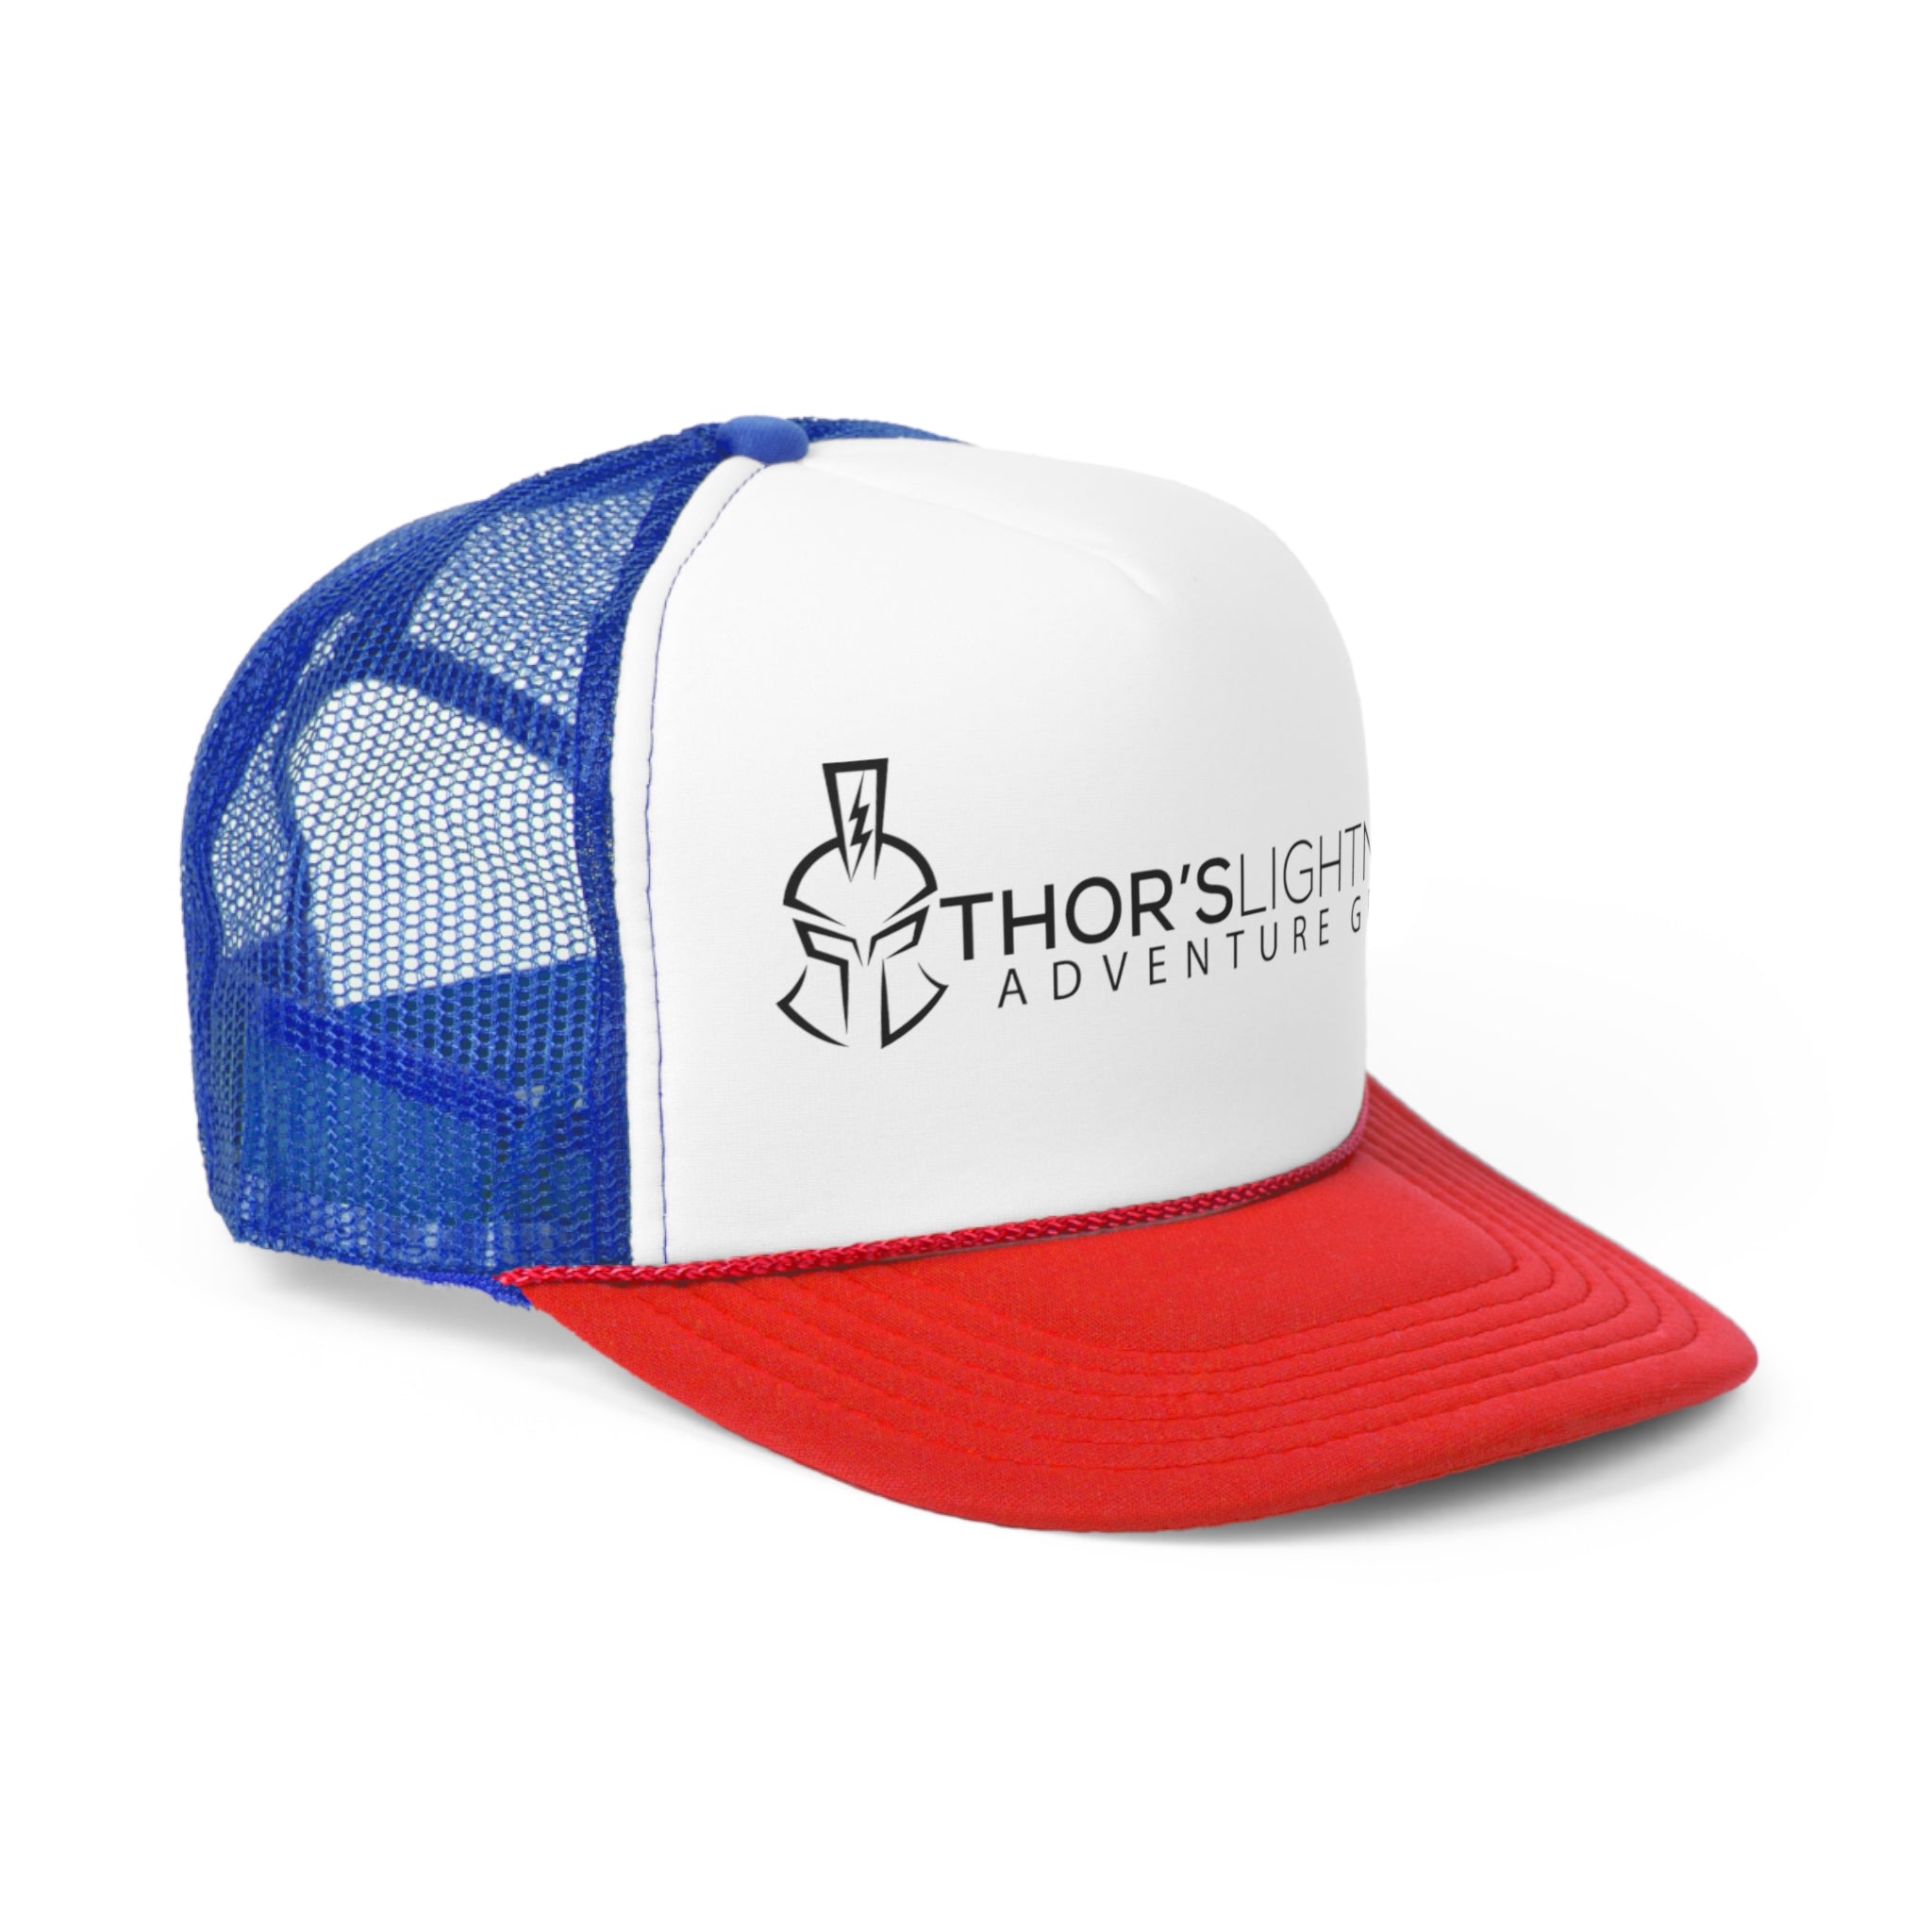 Thor's Lightning Adventure Gear Trucker Cap